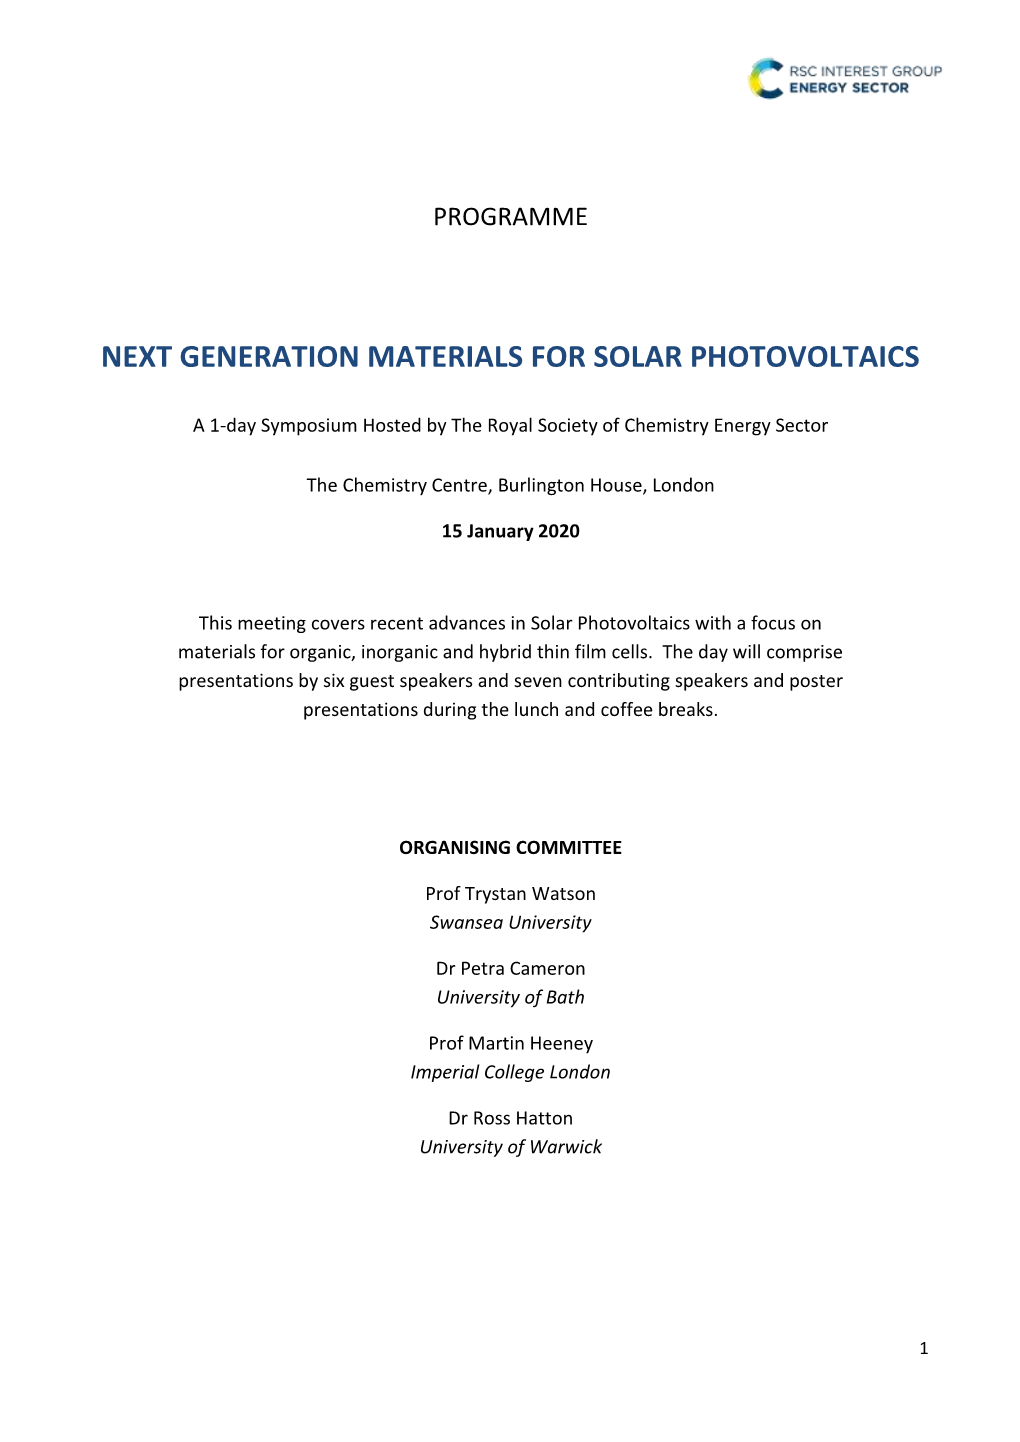 Next Generation Materials for Solar Photovoltaics